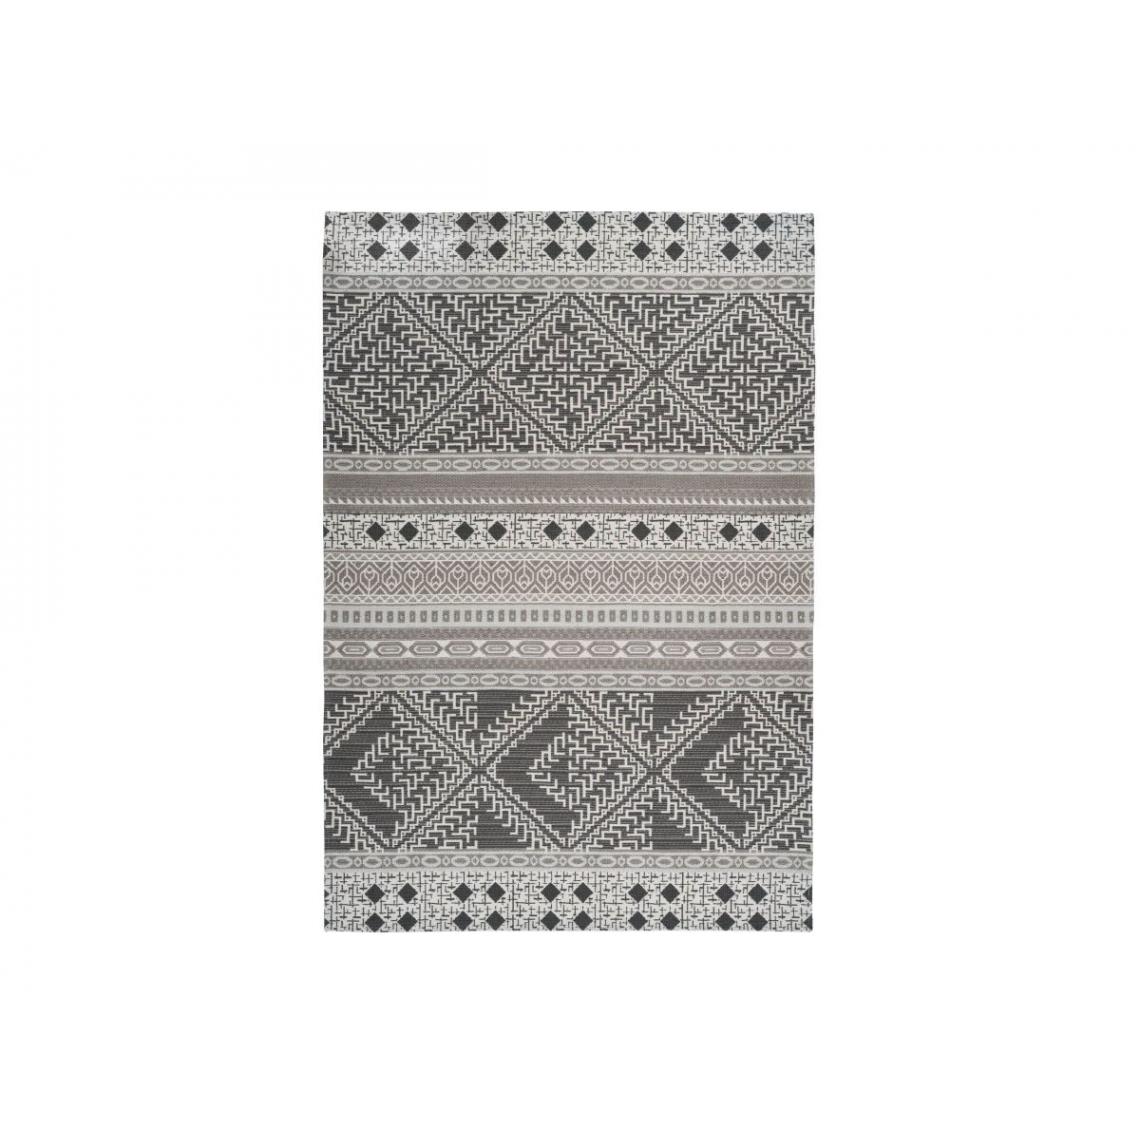 Bobochic - BOBOCHIC Tapis poil court rectangulaire NIMIA motif ethnique Taupe 120x170 - Tapis